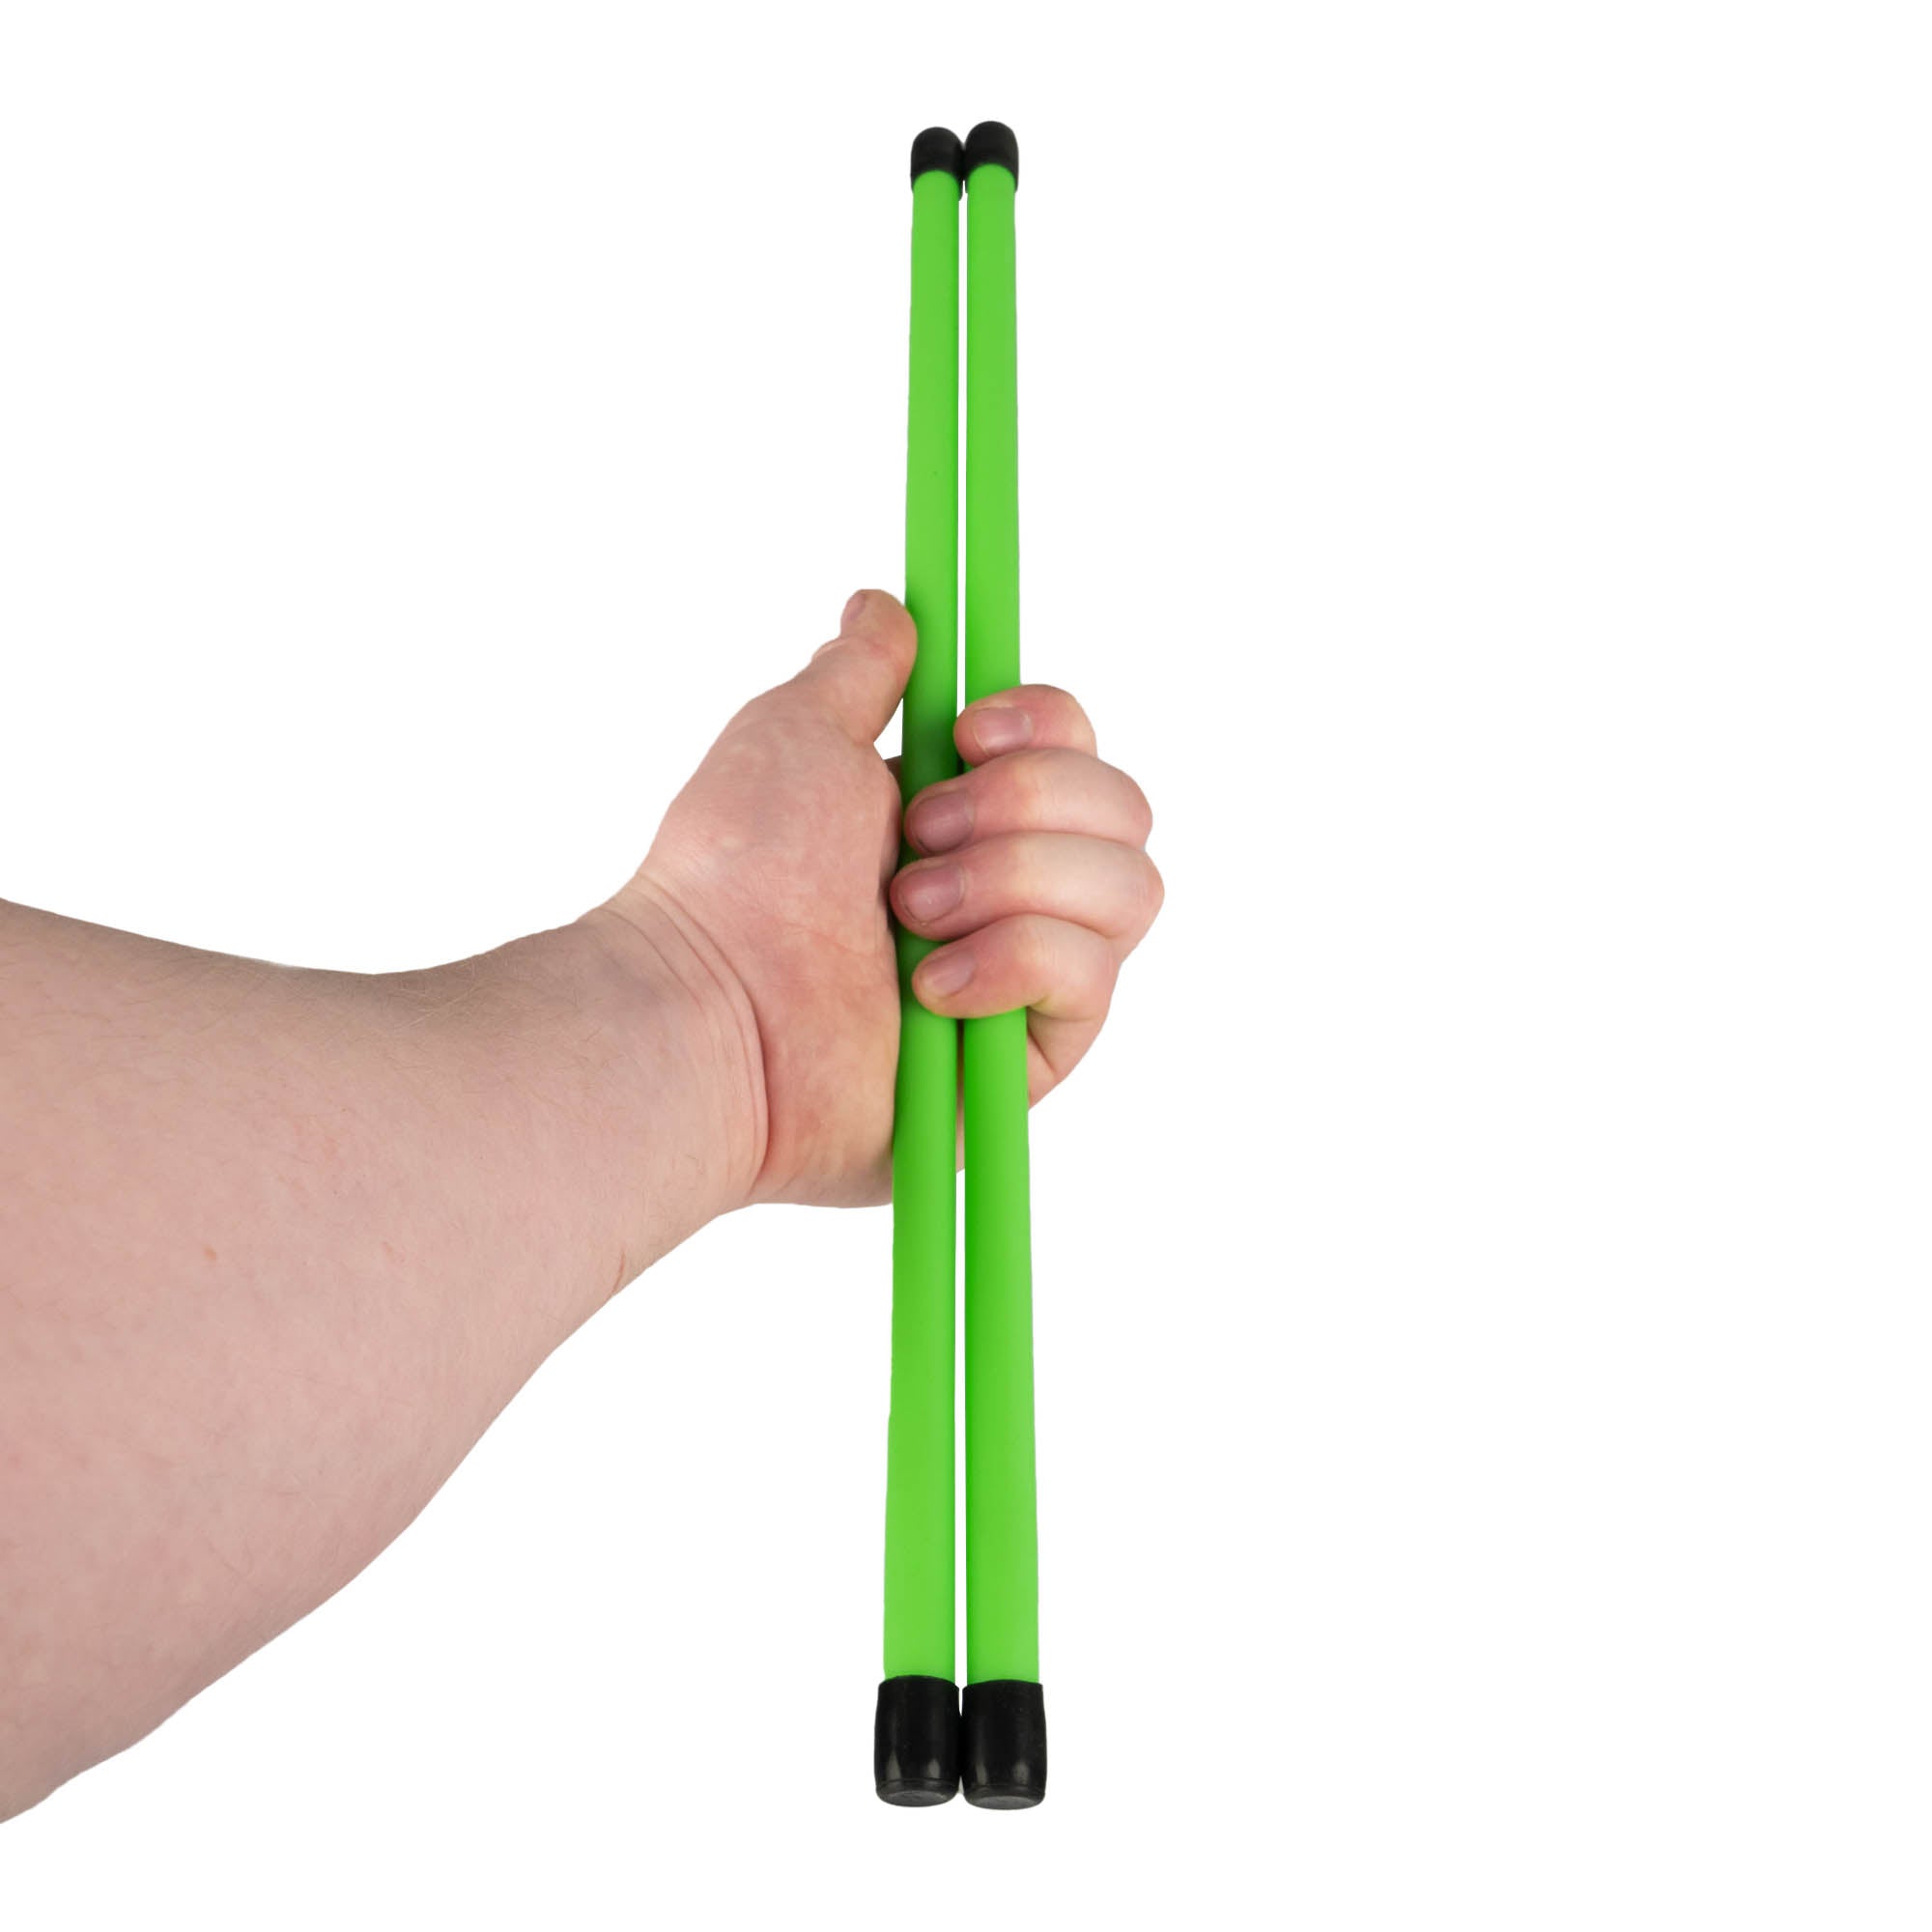 Pair of green devilstick handsticks in hand